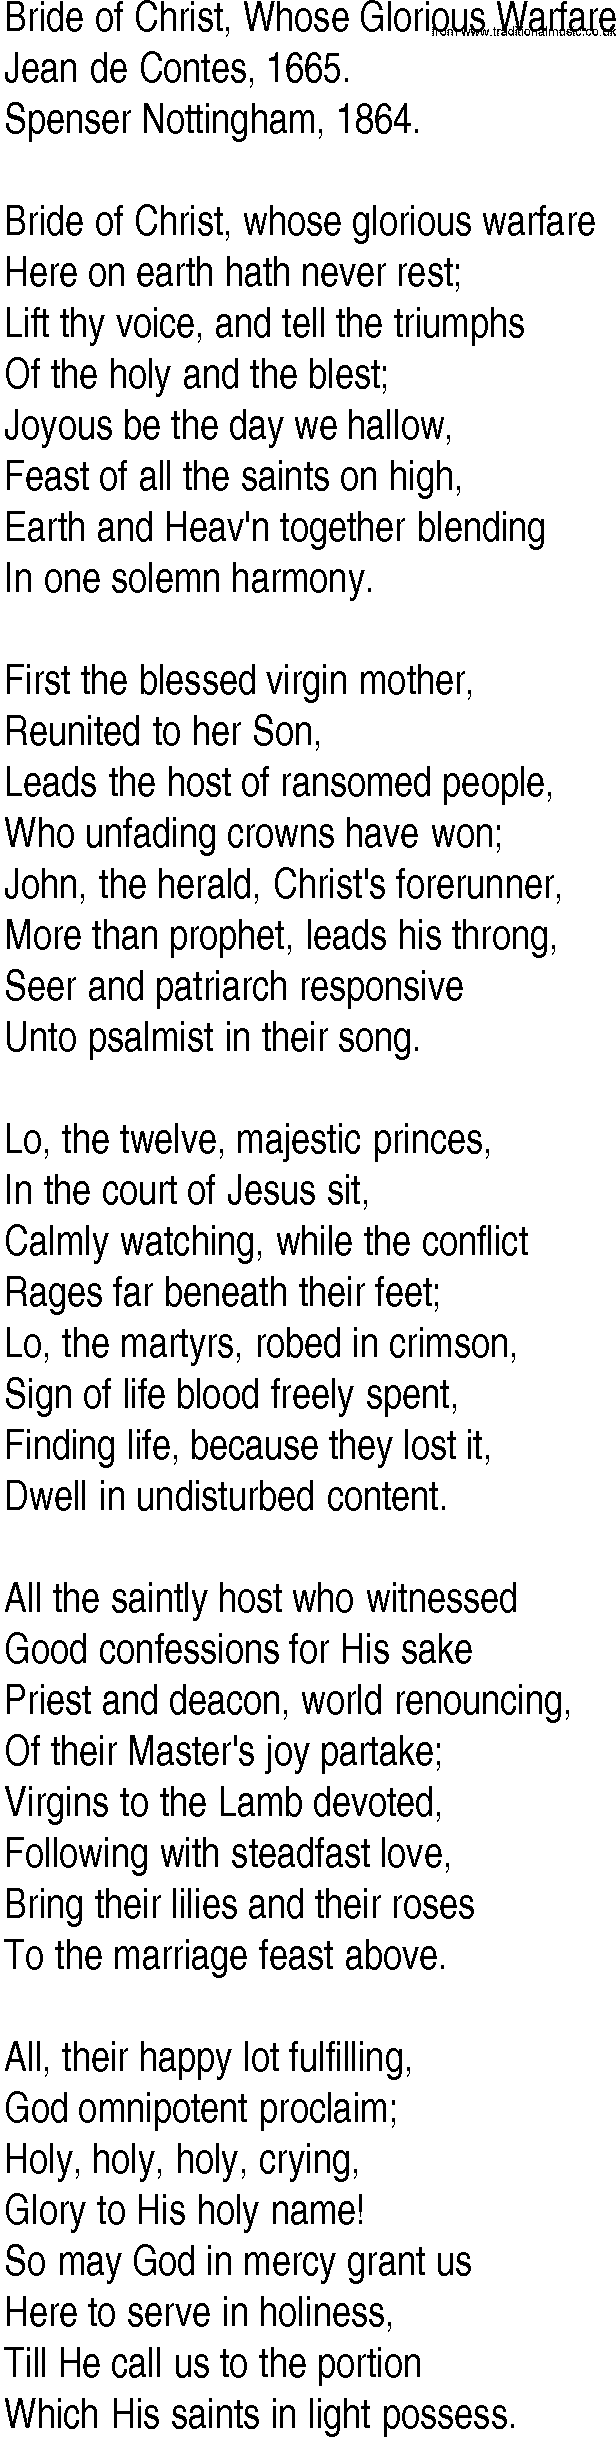 Hymn and Gospel Song: Bride of Christ, Whose Glorious Warfare by Jean de Contes lyrics